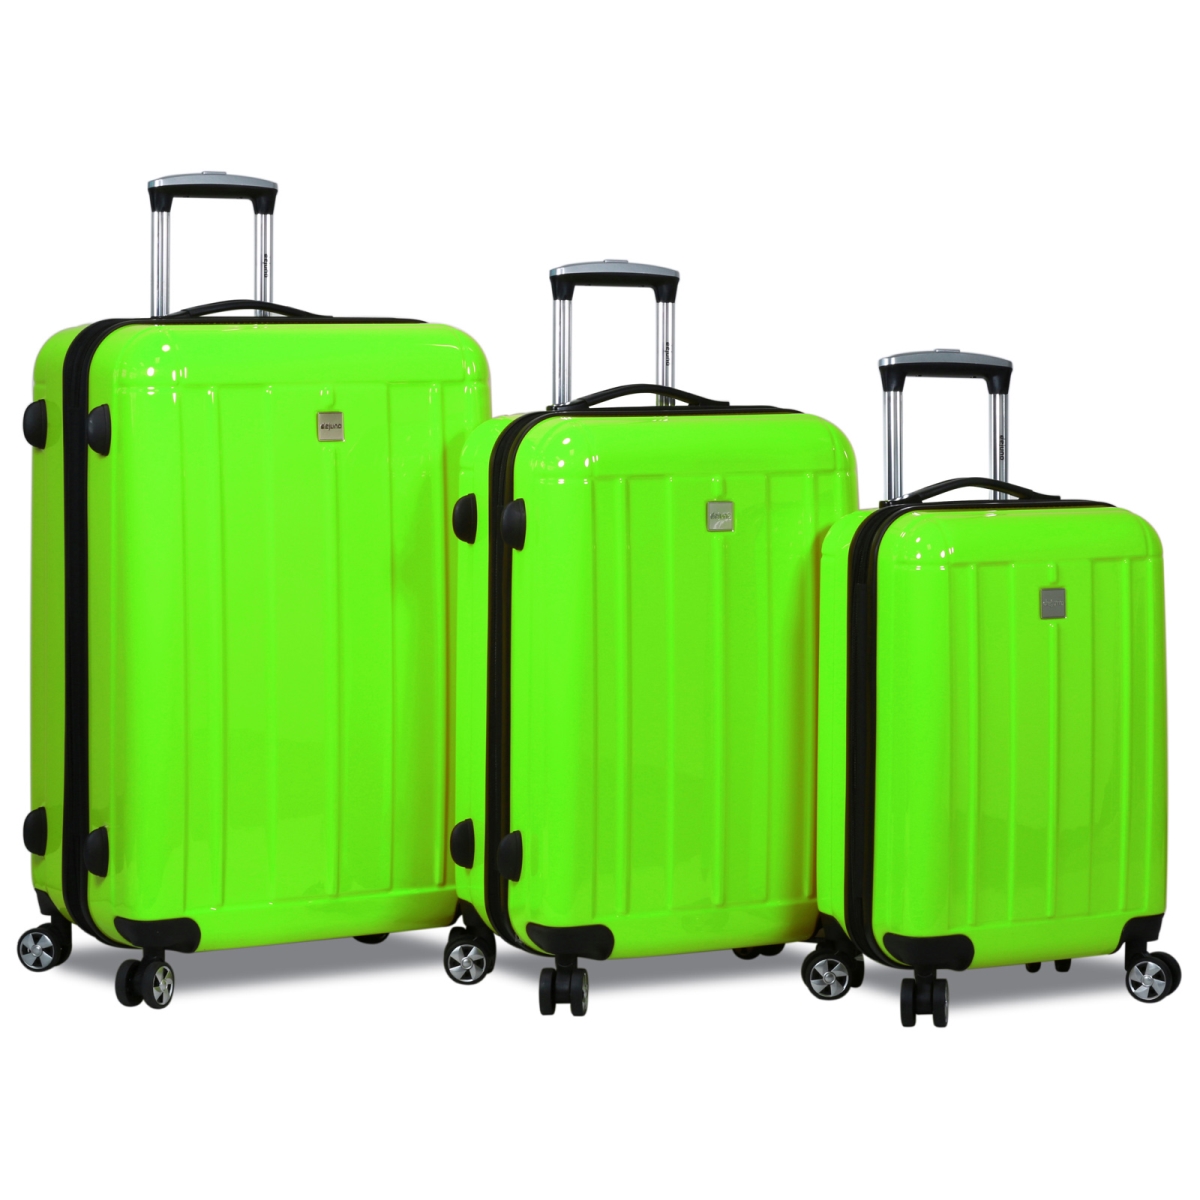 Dj-8273-apple Green Contour Hardside Spinner Tsa Lock Luggage Set - Apple Green, 3 Piece